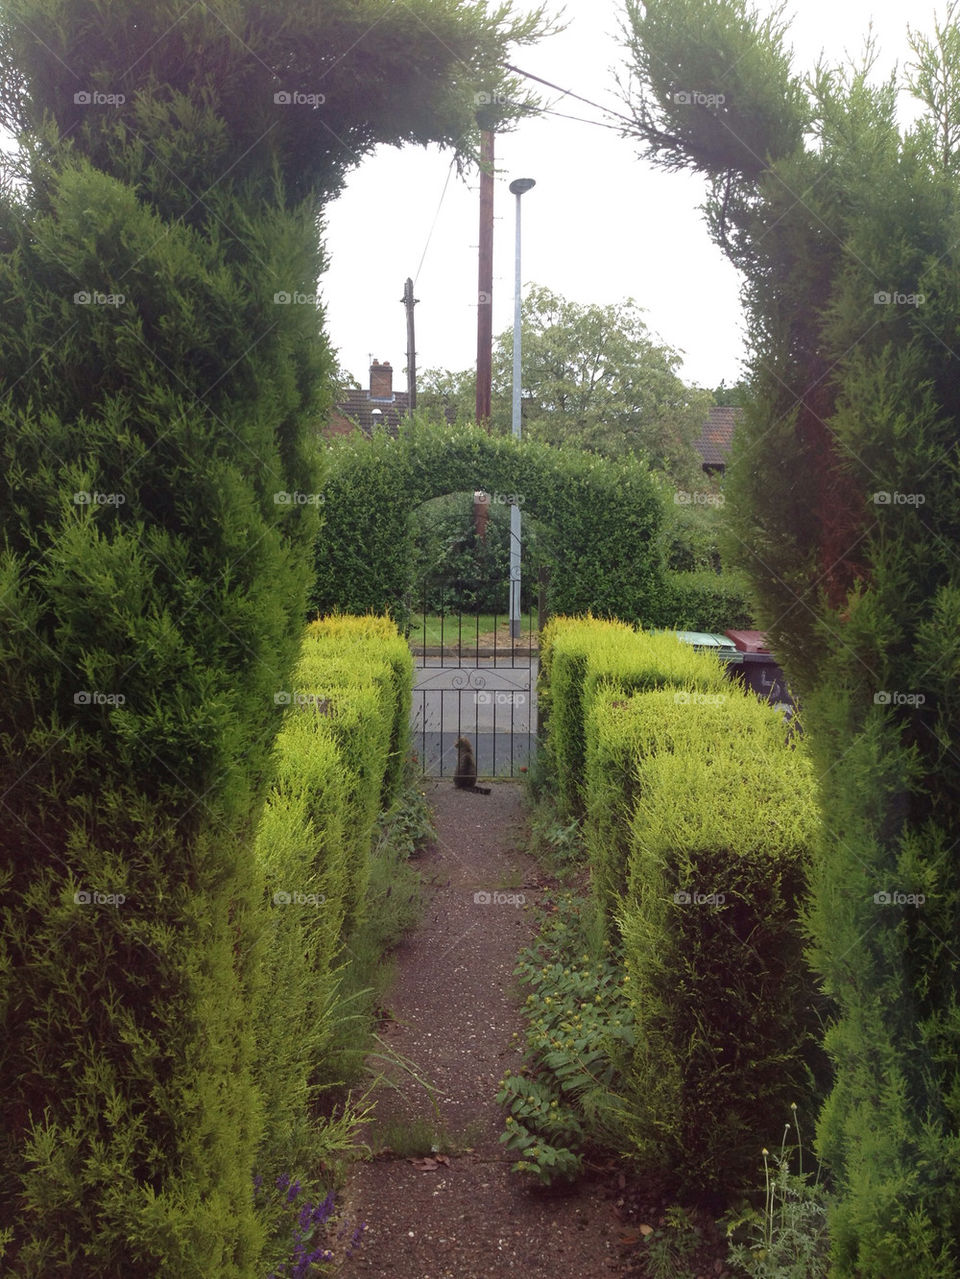 garden cat path hedges by stevephot